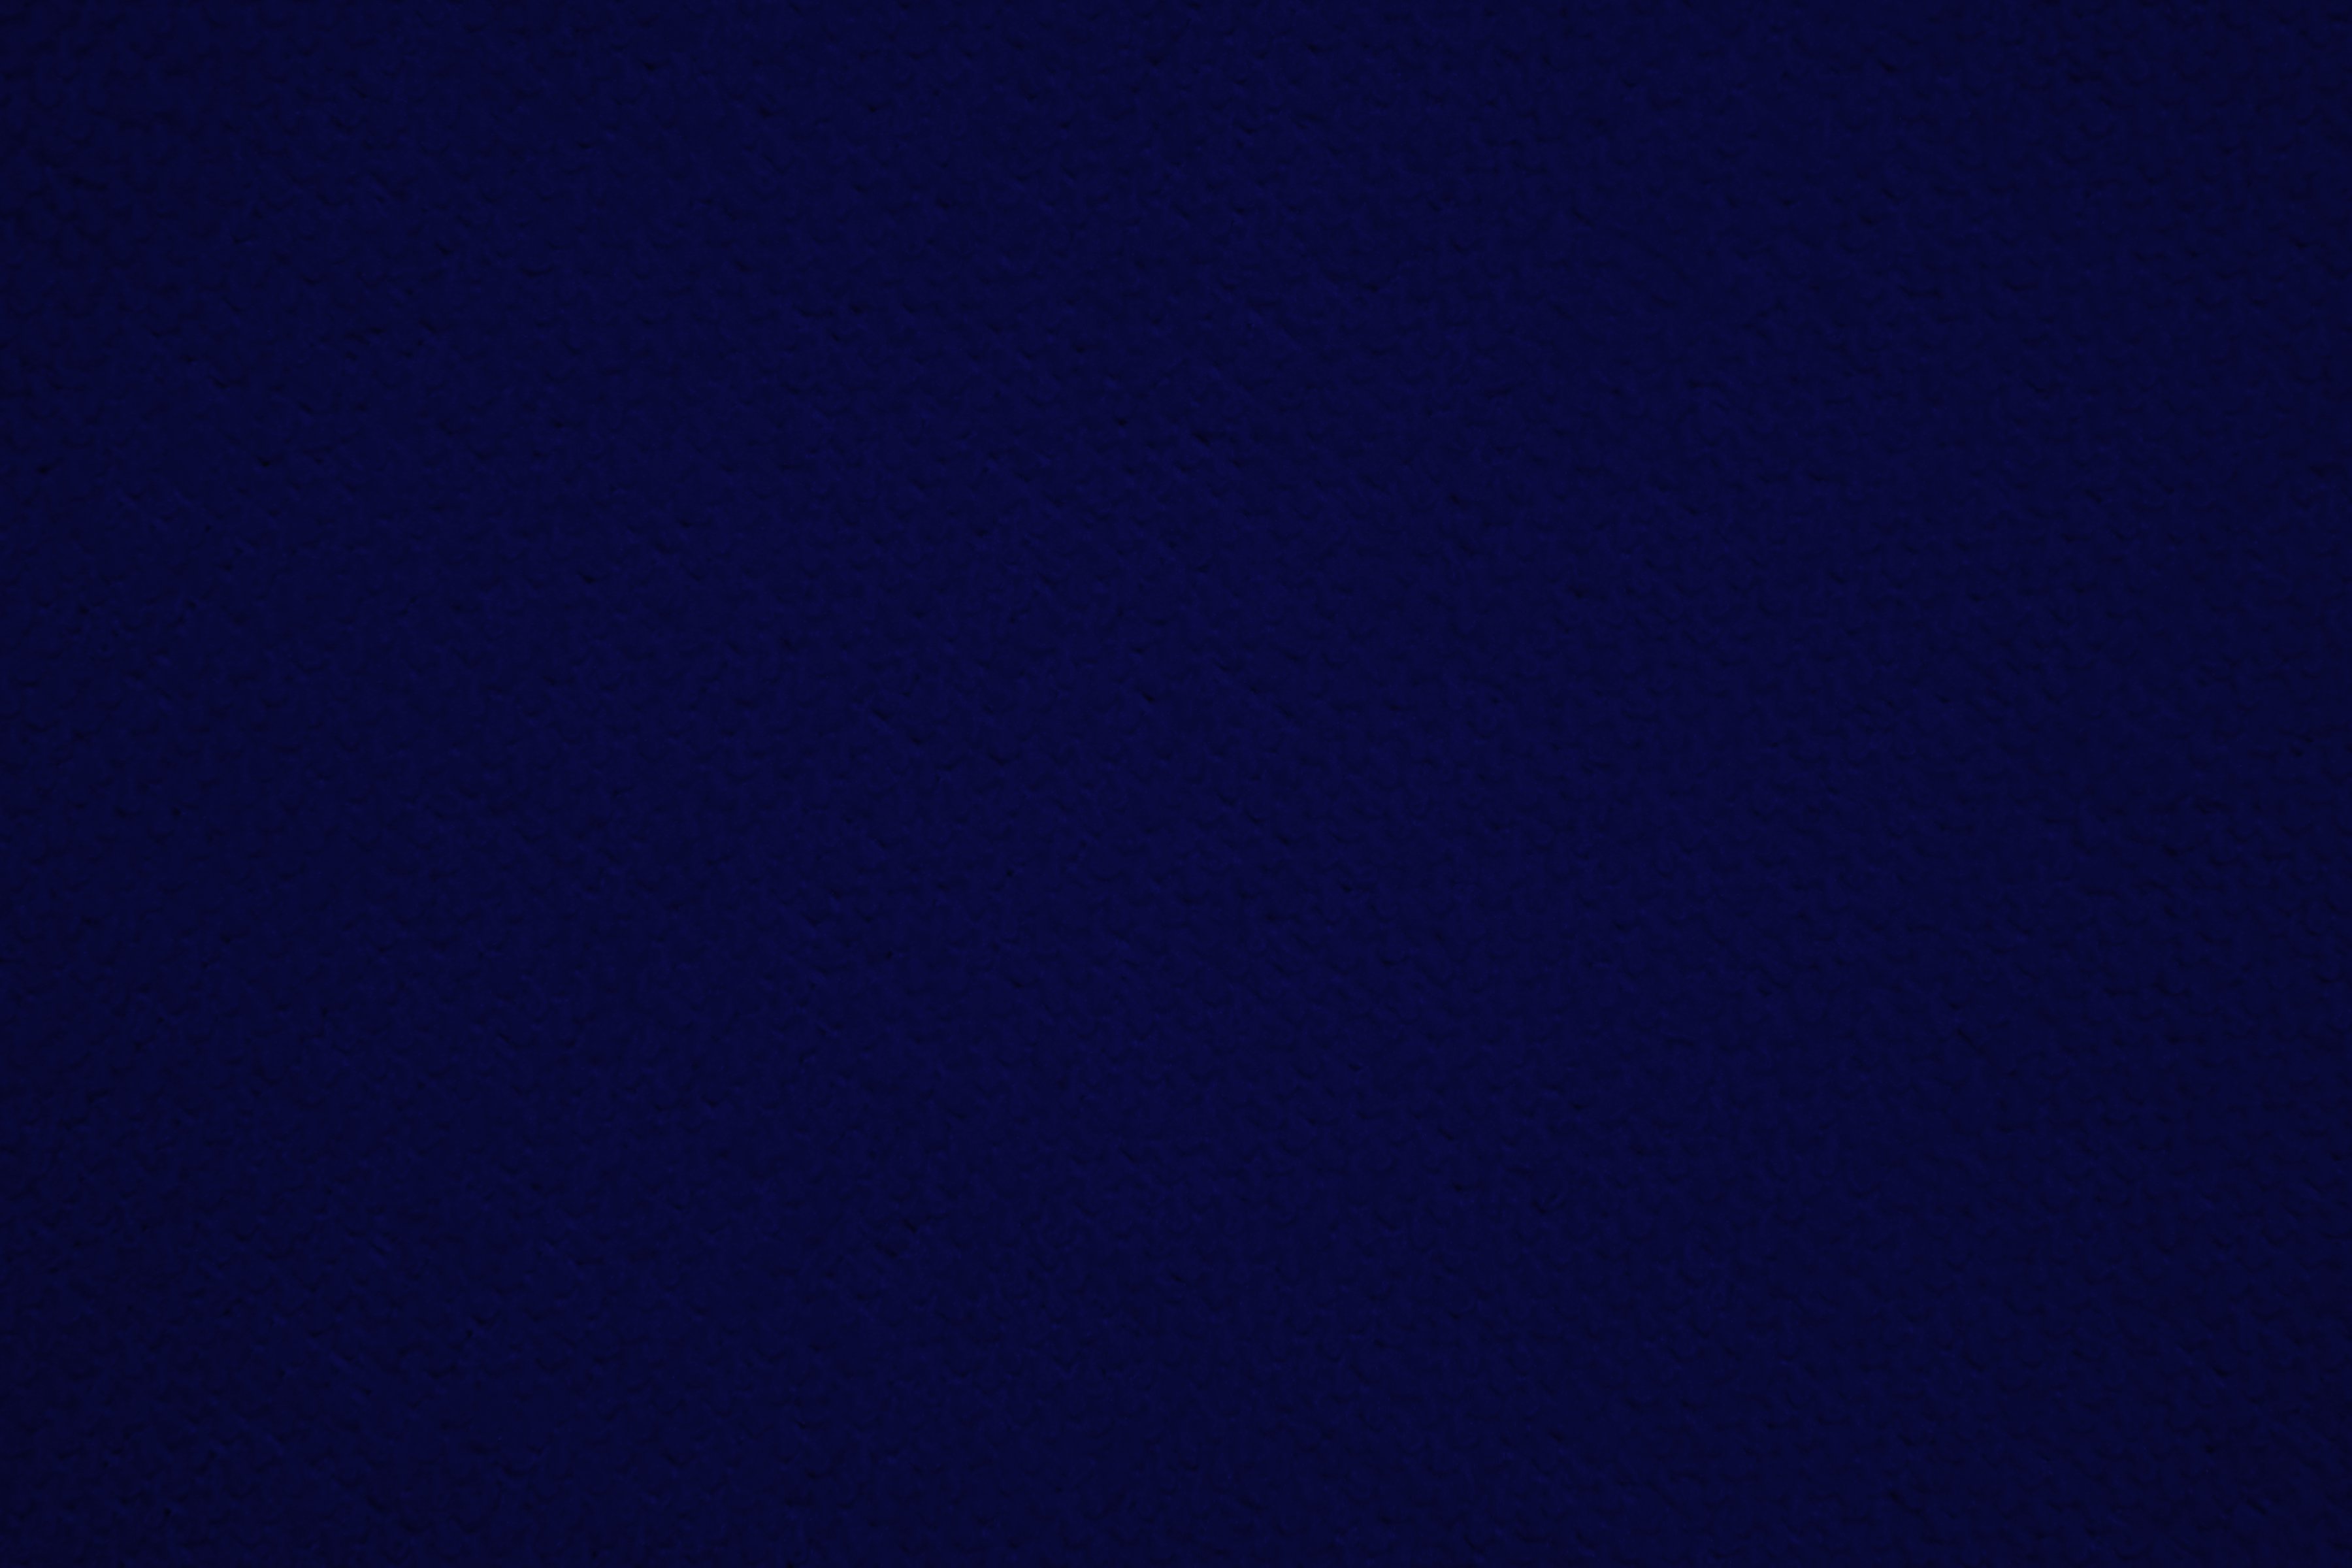 Dark Navy Blue Wallpaper Fabric Texture Leather